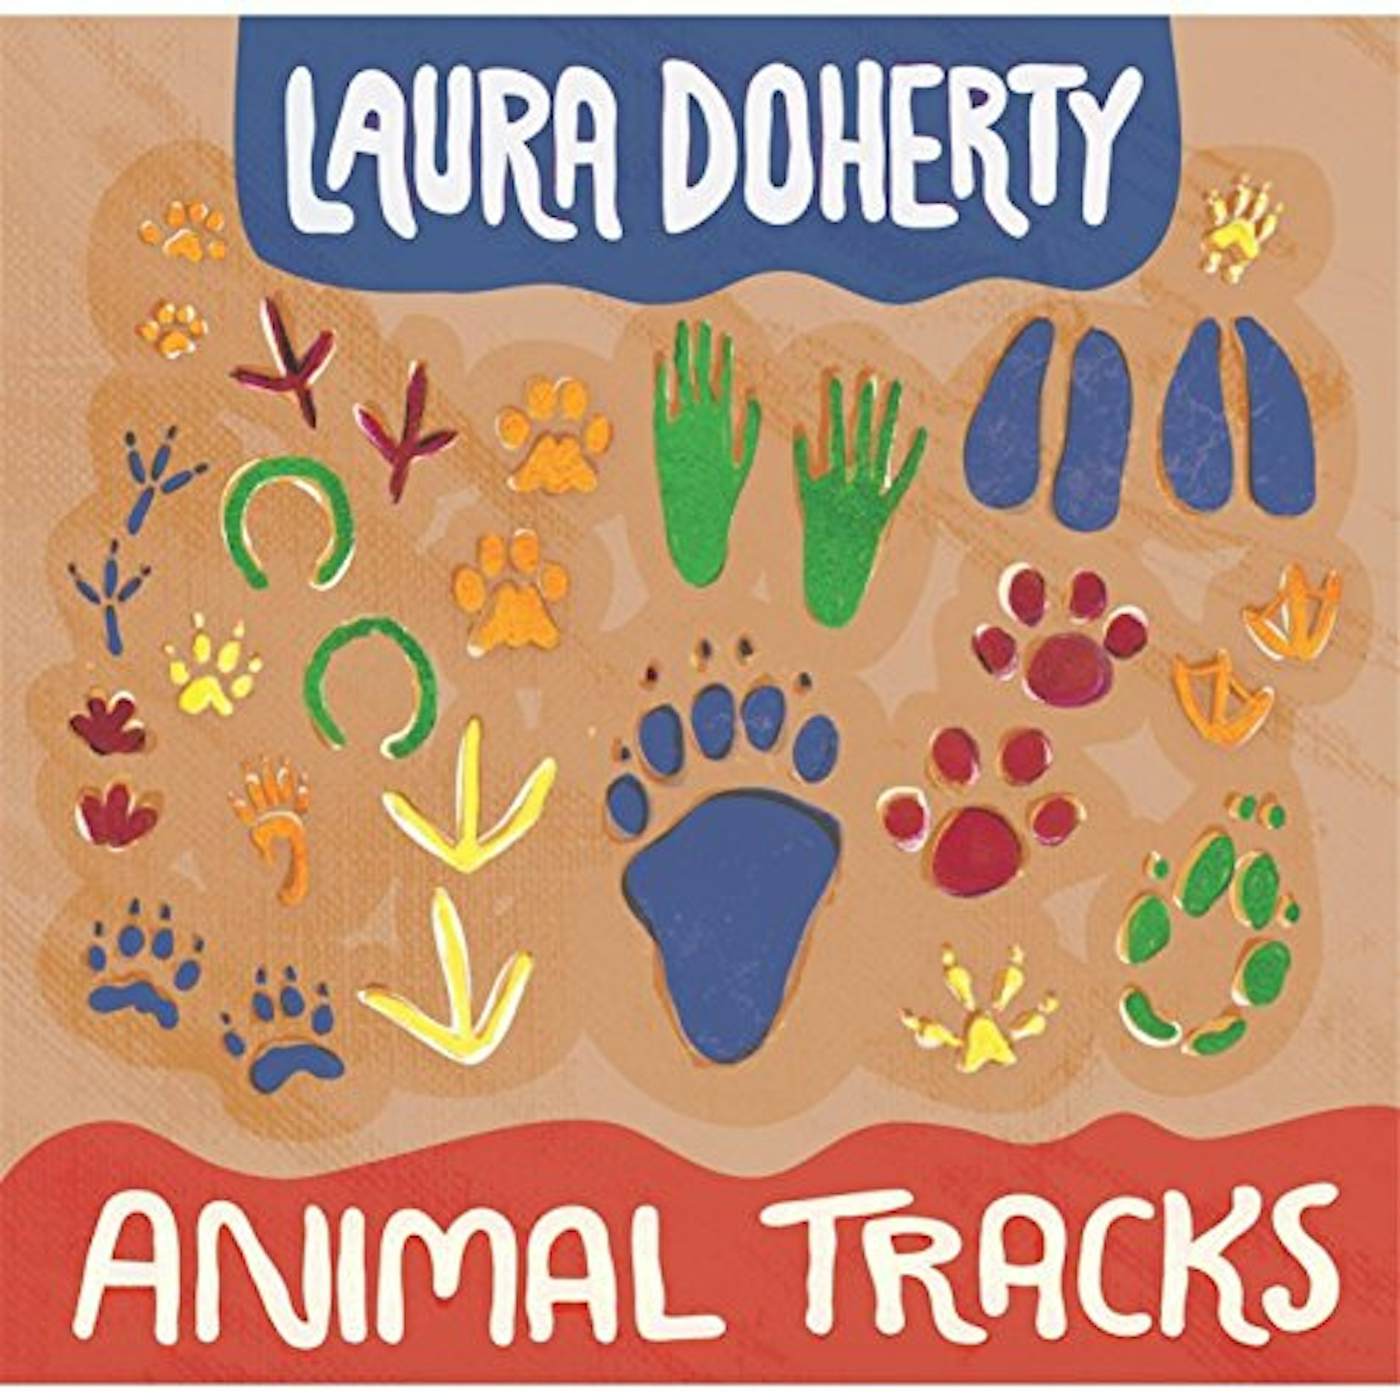 Laura Doherty ANIMAL TRACKS CD